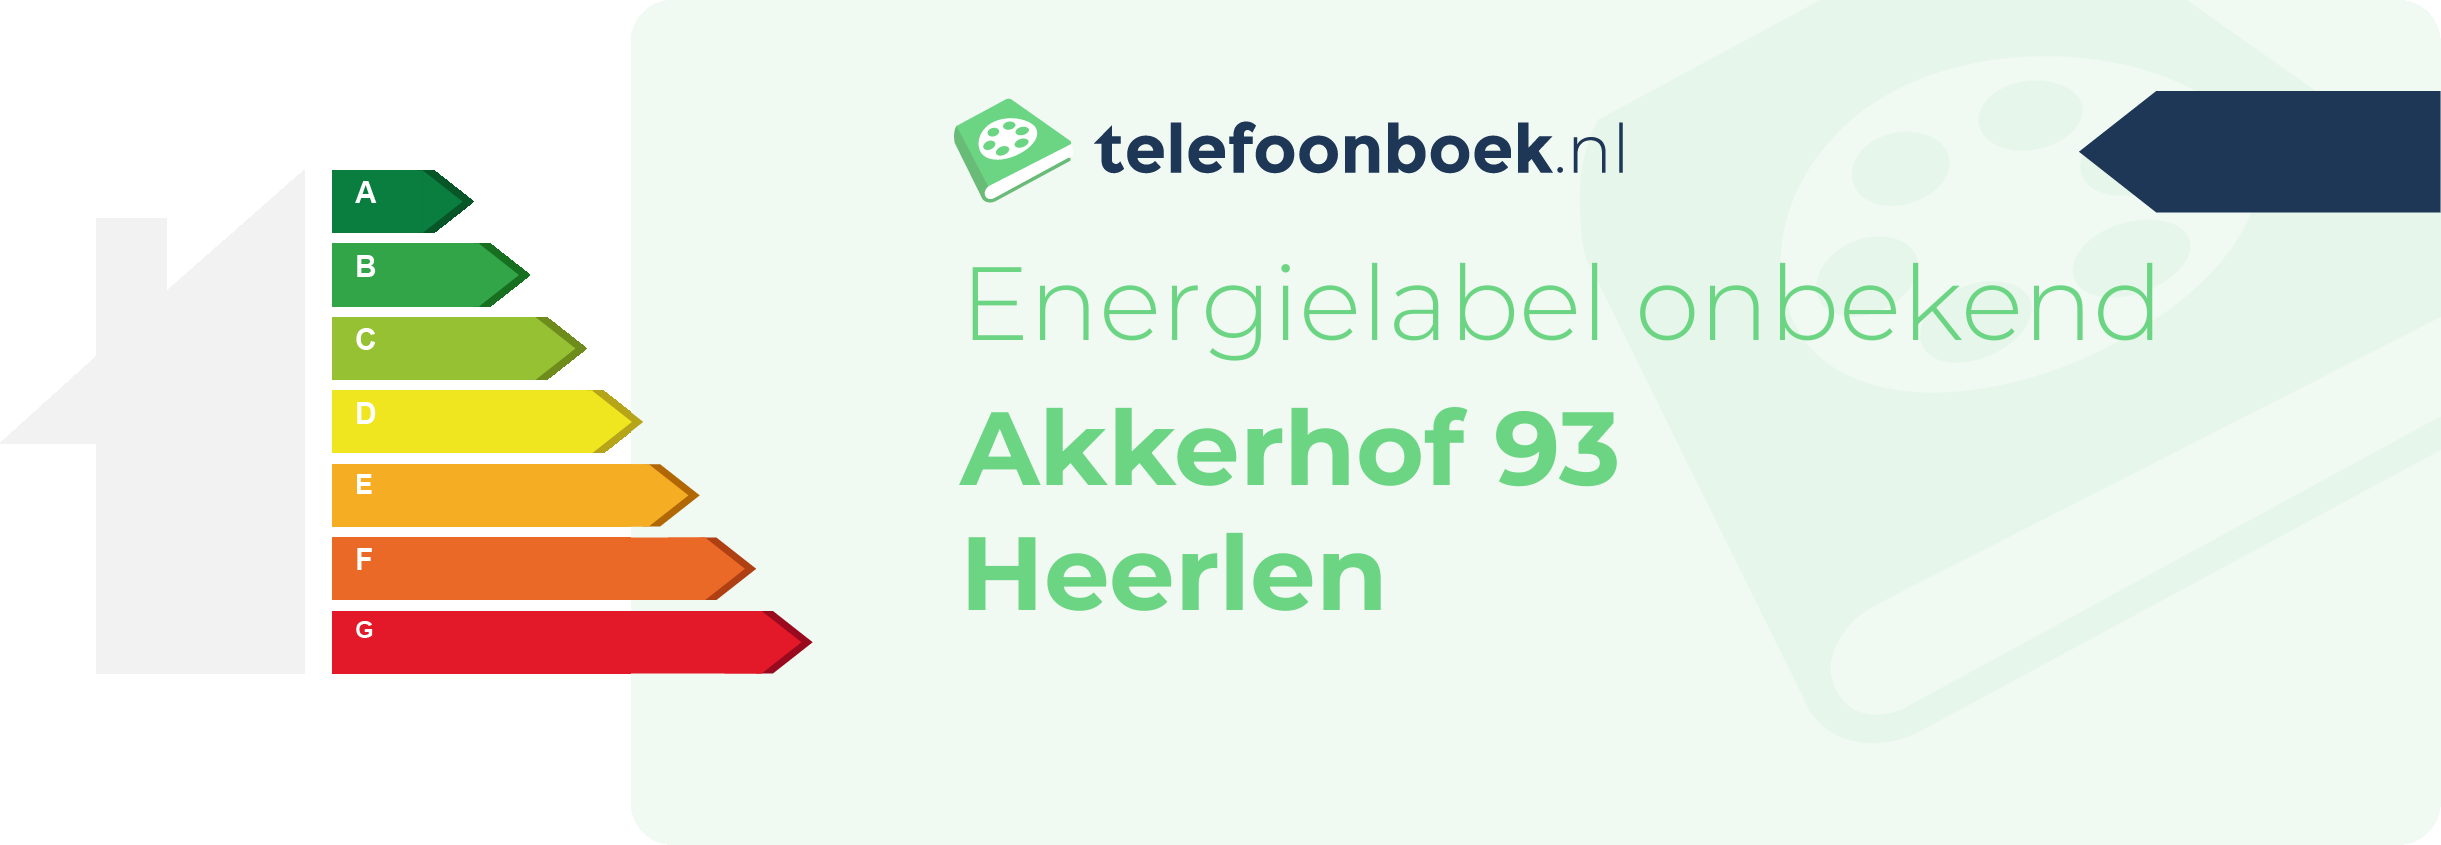 Energielabel Akkerhof 93 Heerlen